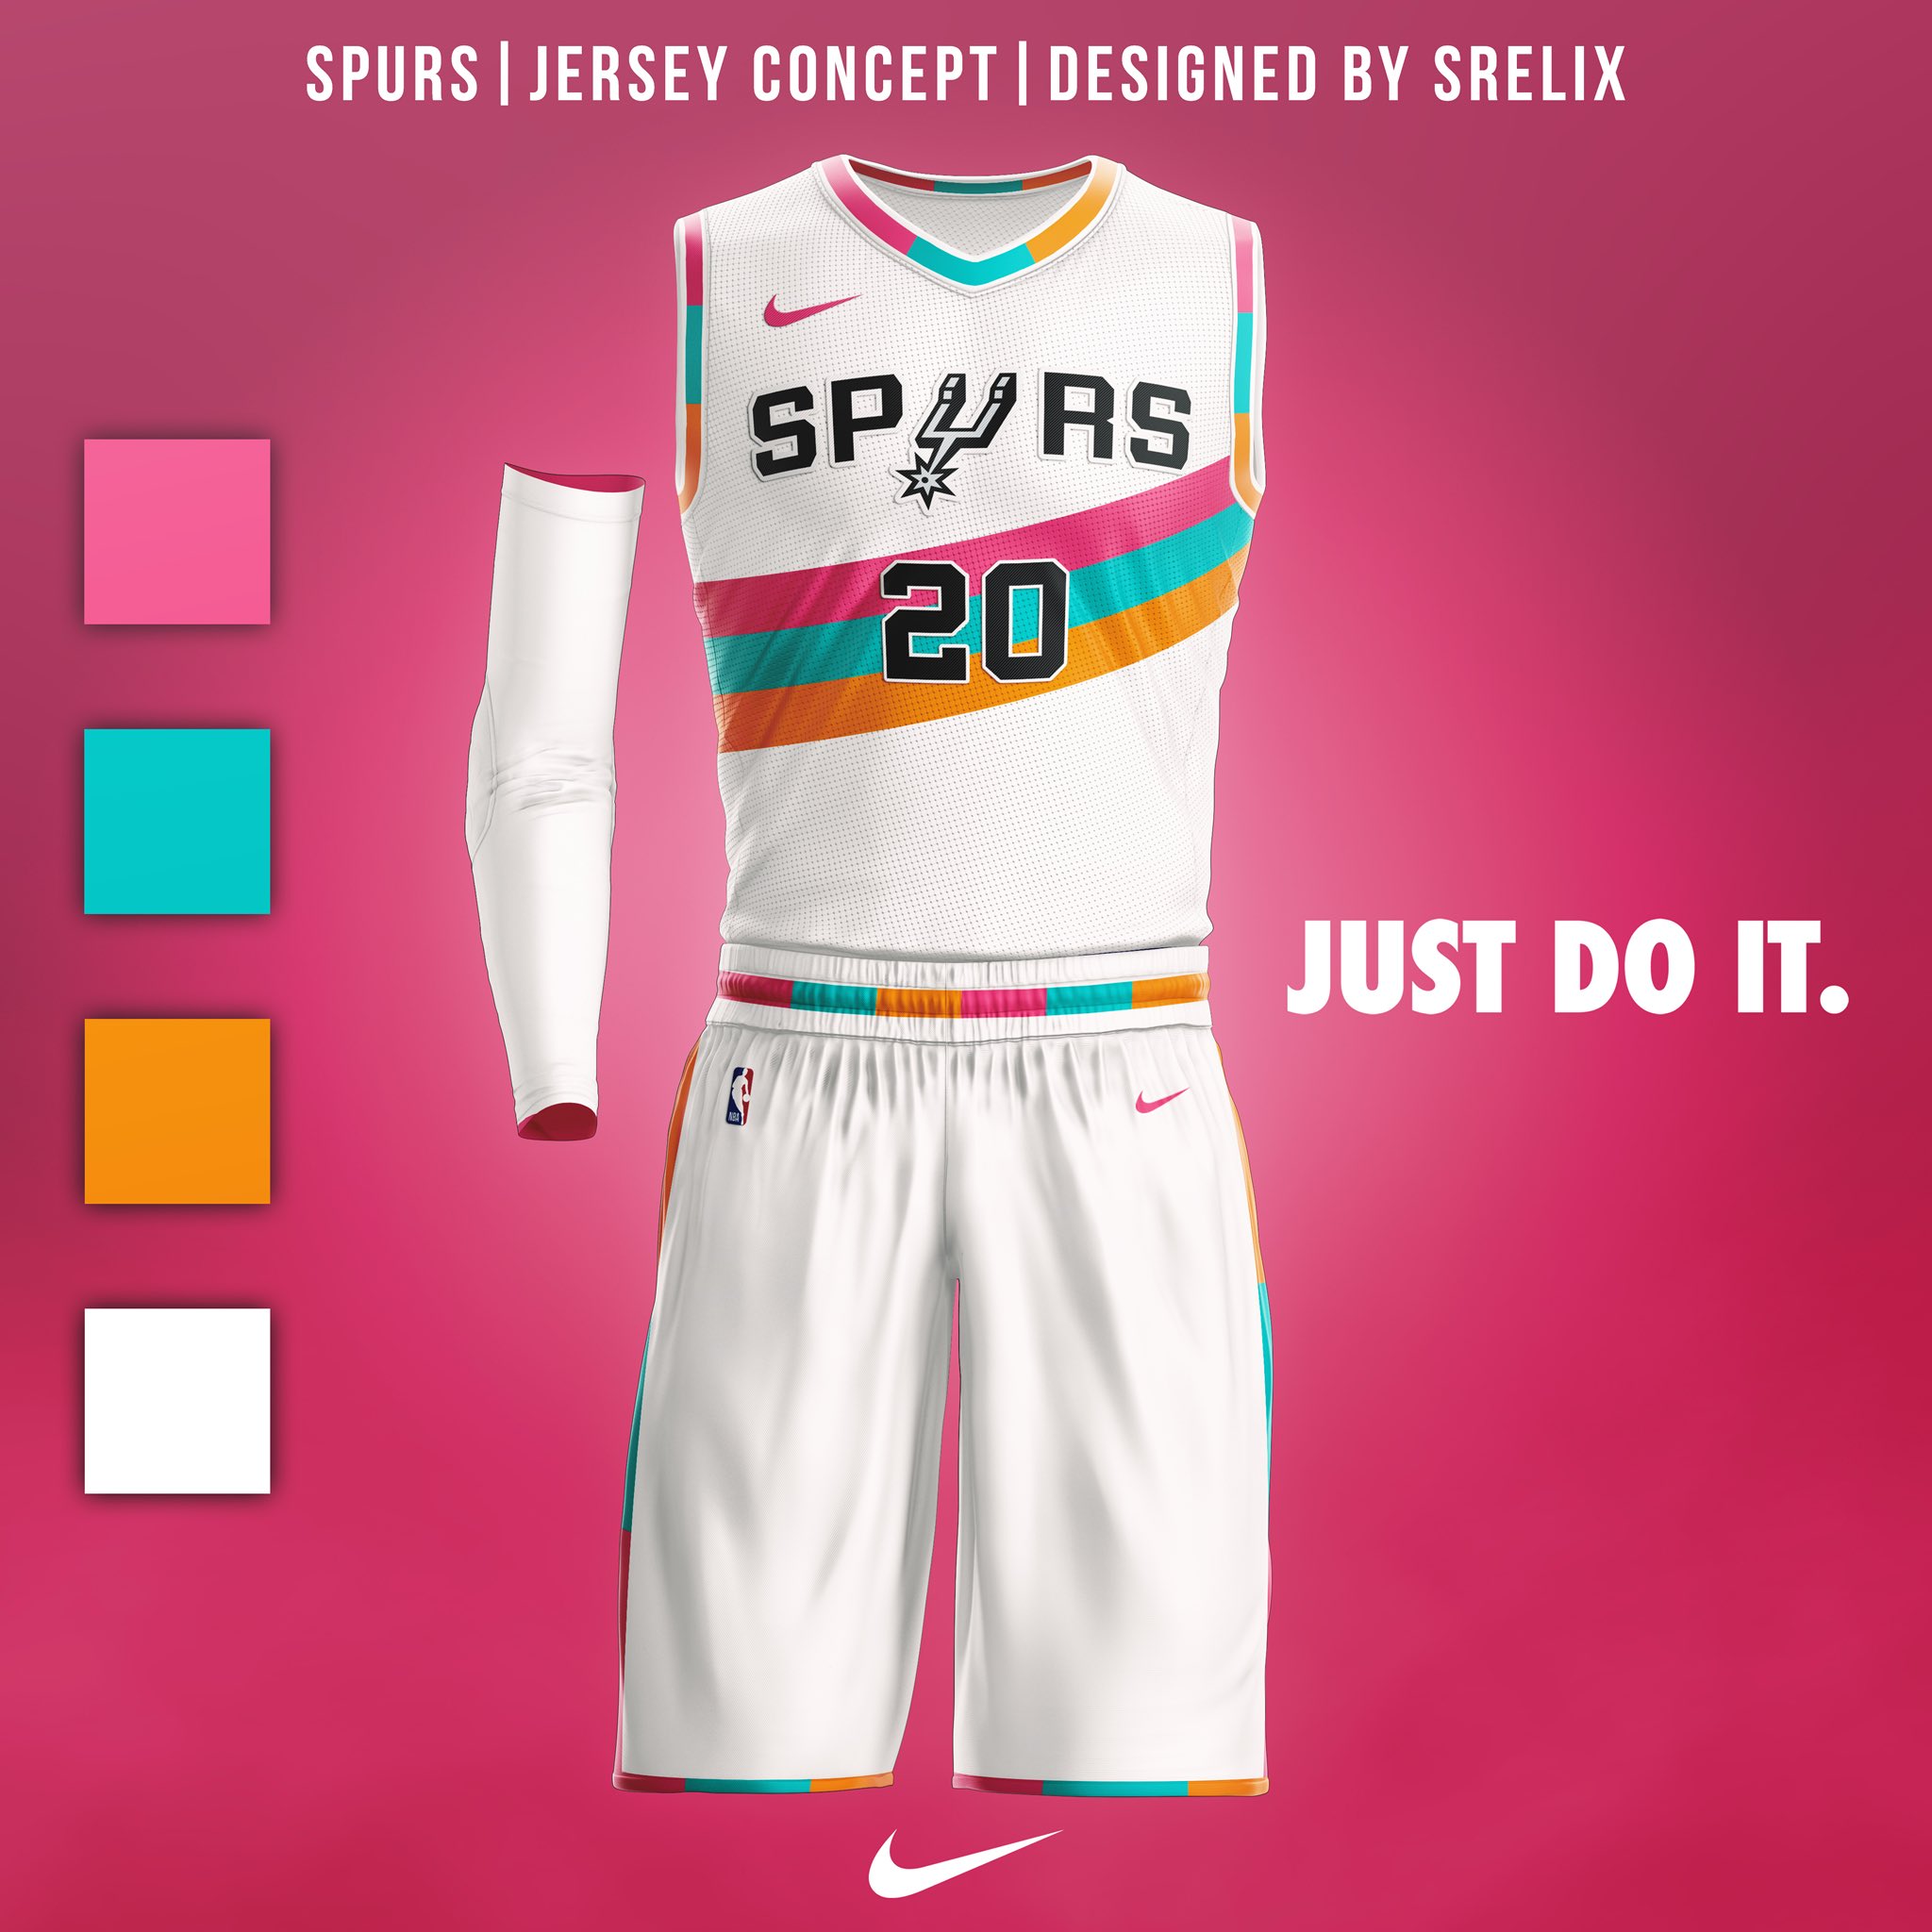 spurs concept jersey